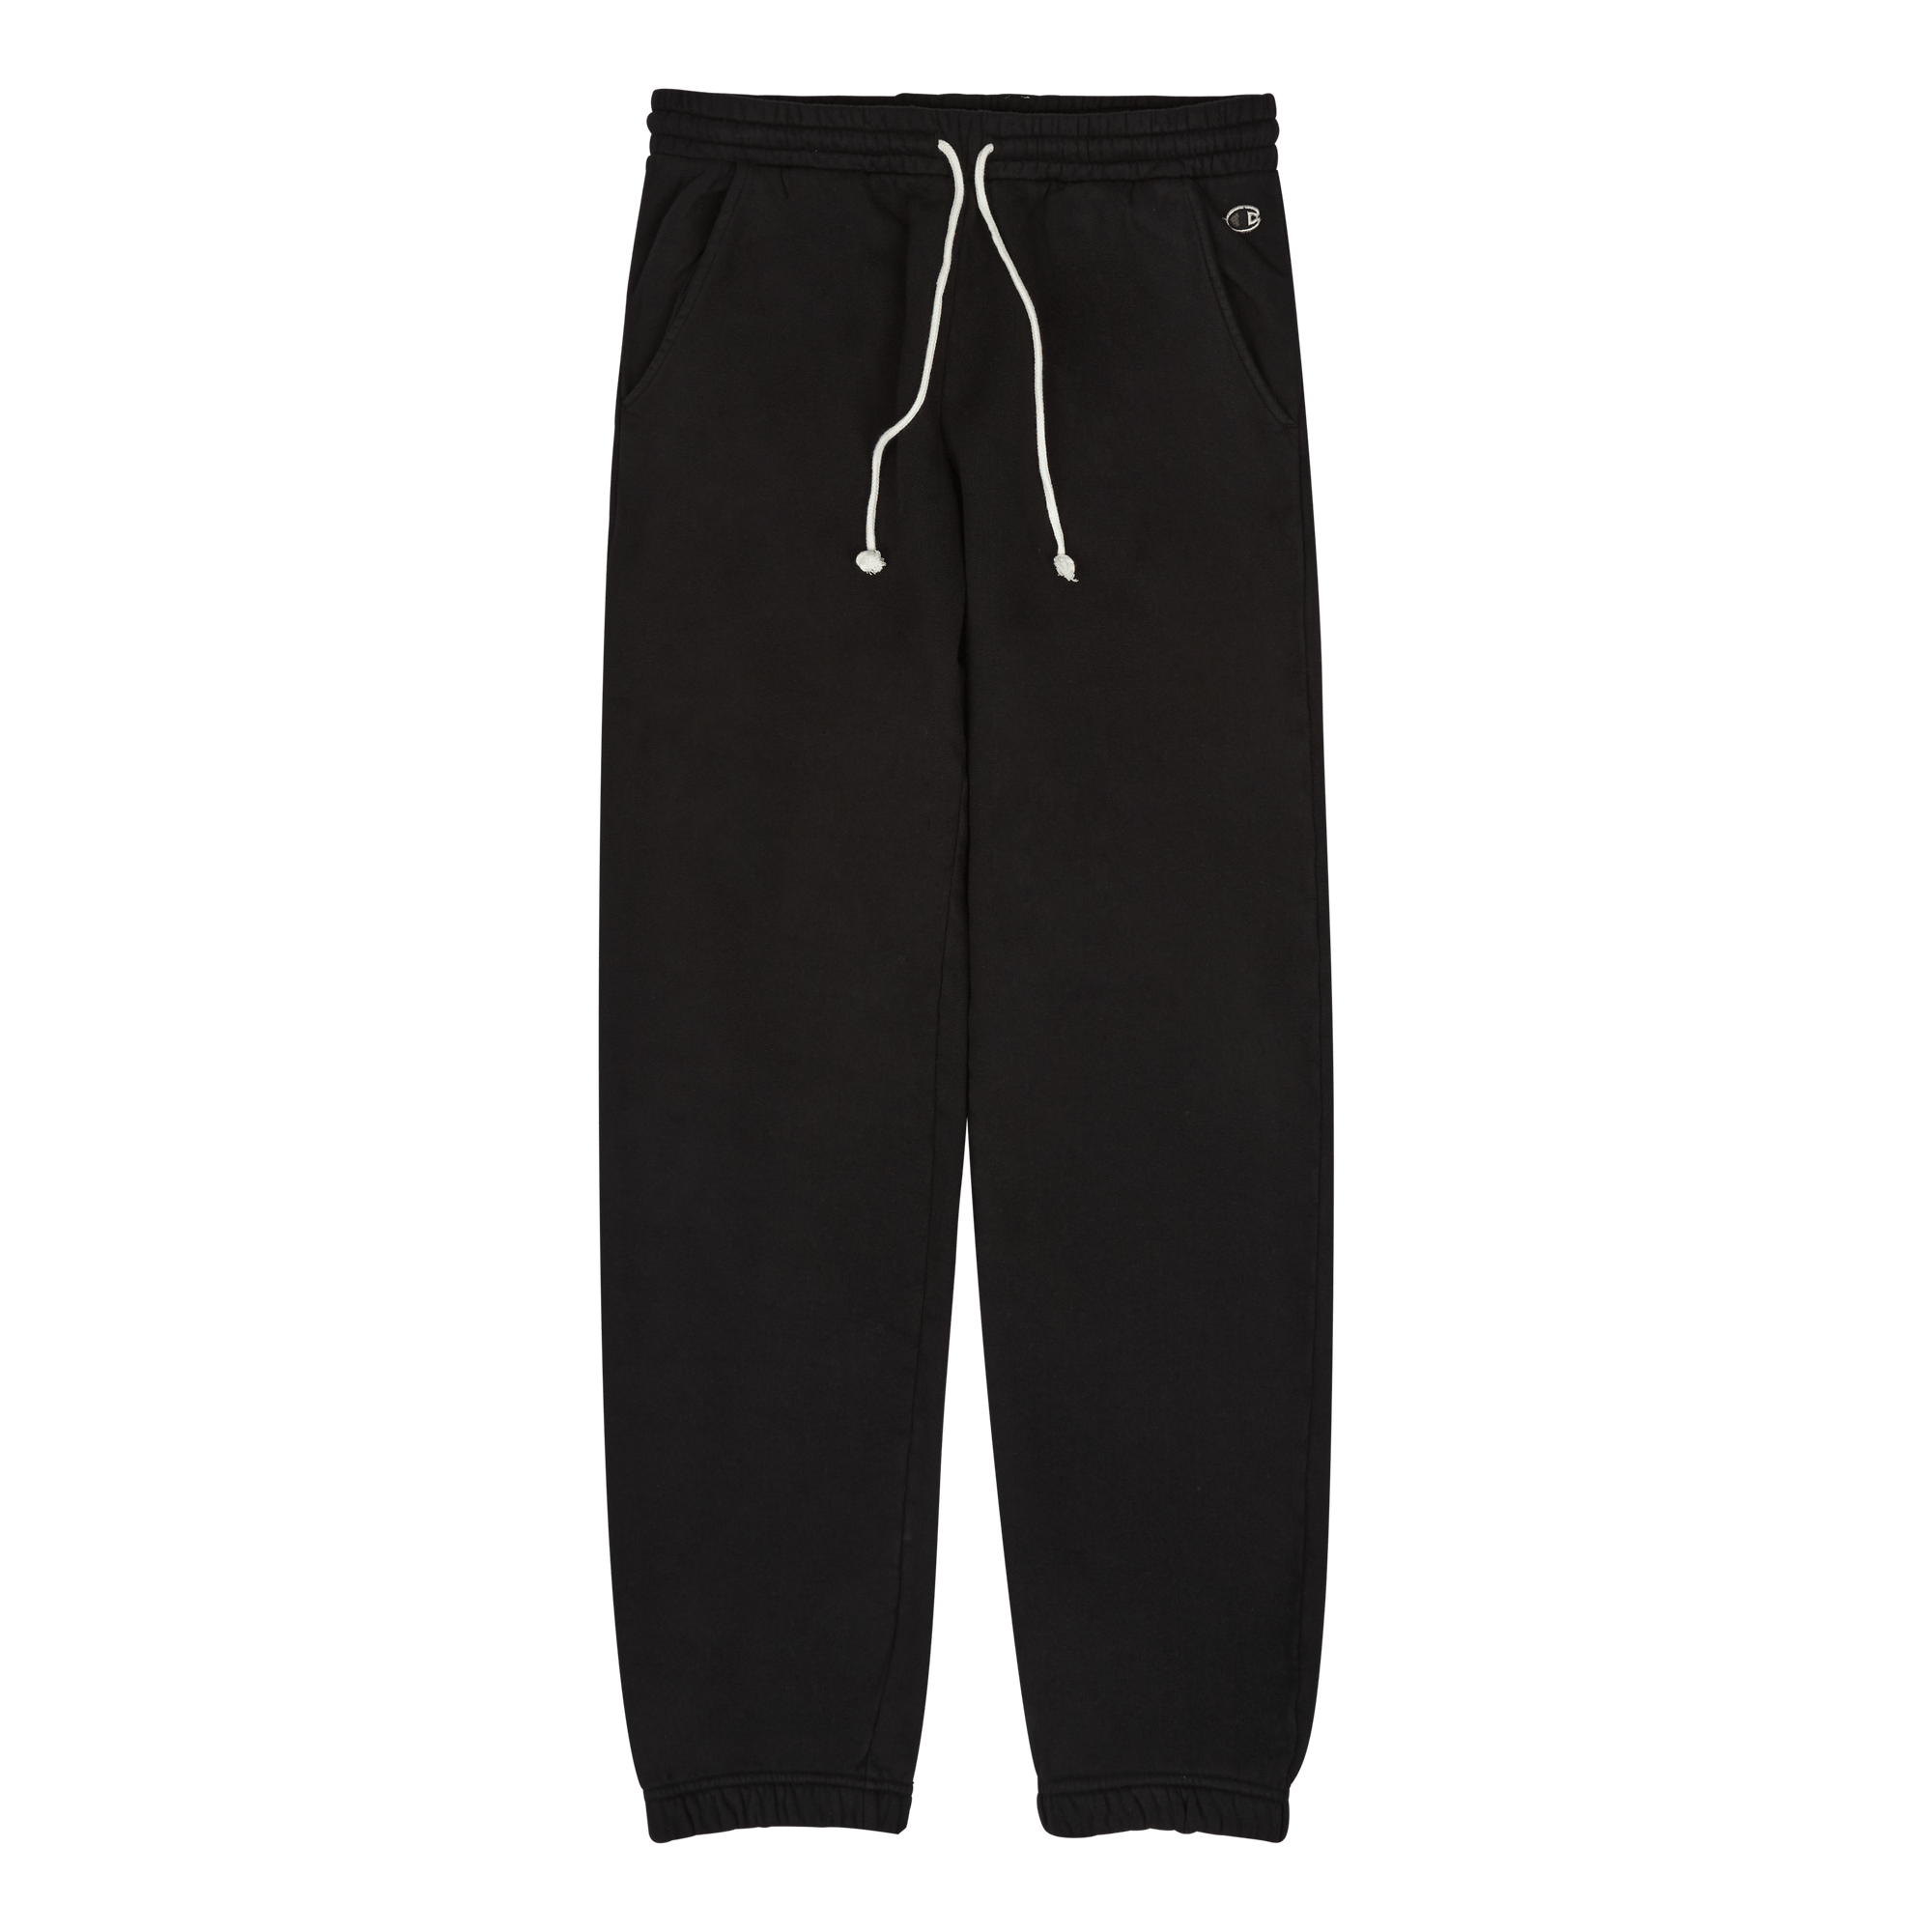 Premium Elastic Cuff Pants Black Beauty Reverse Weave